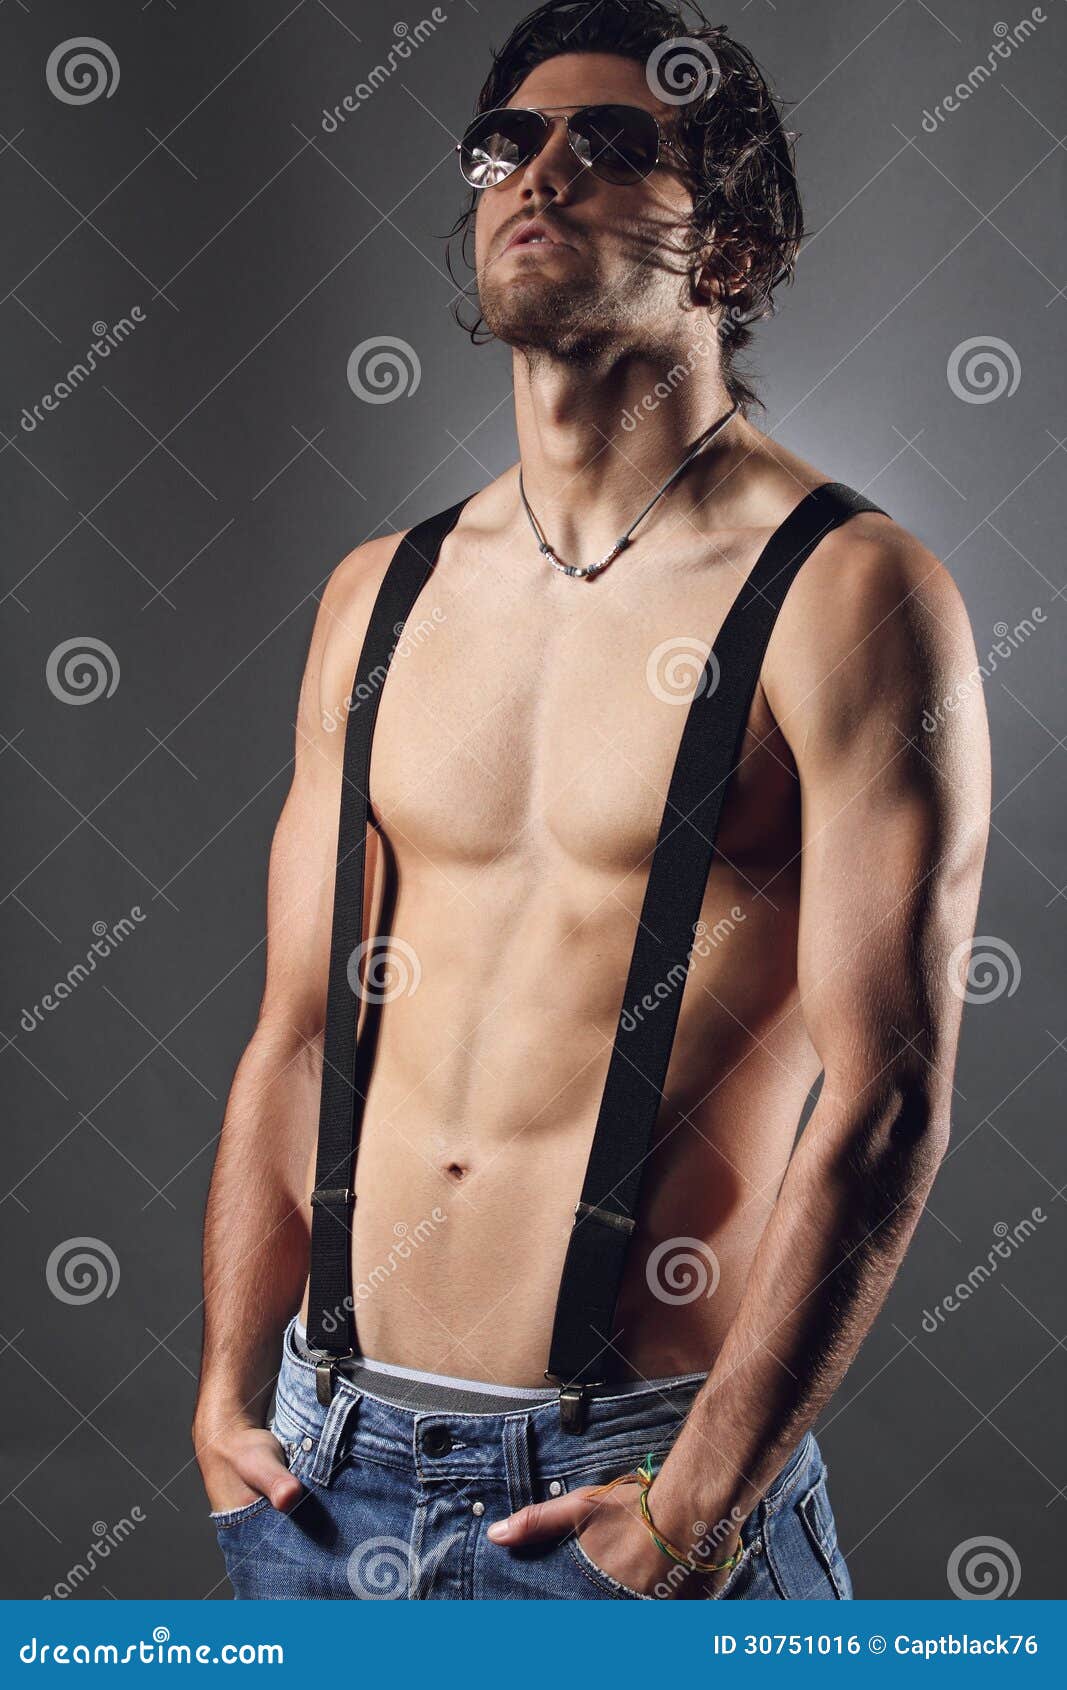 Men In Stockings And Suspenders